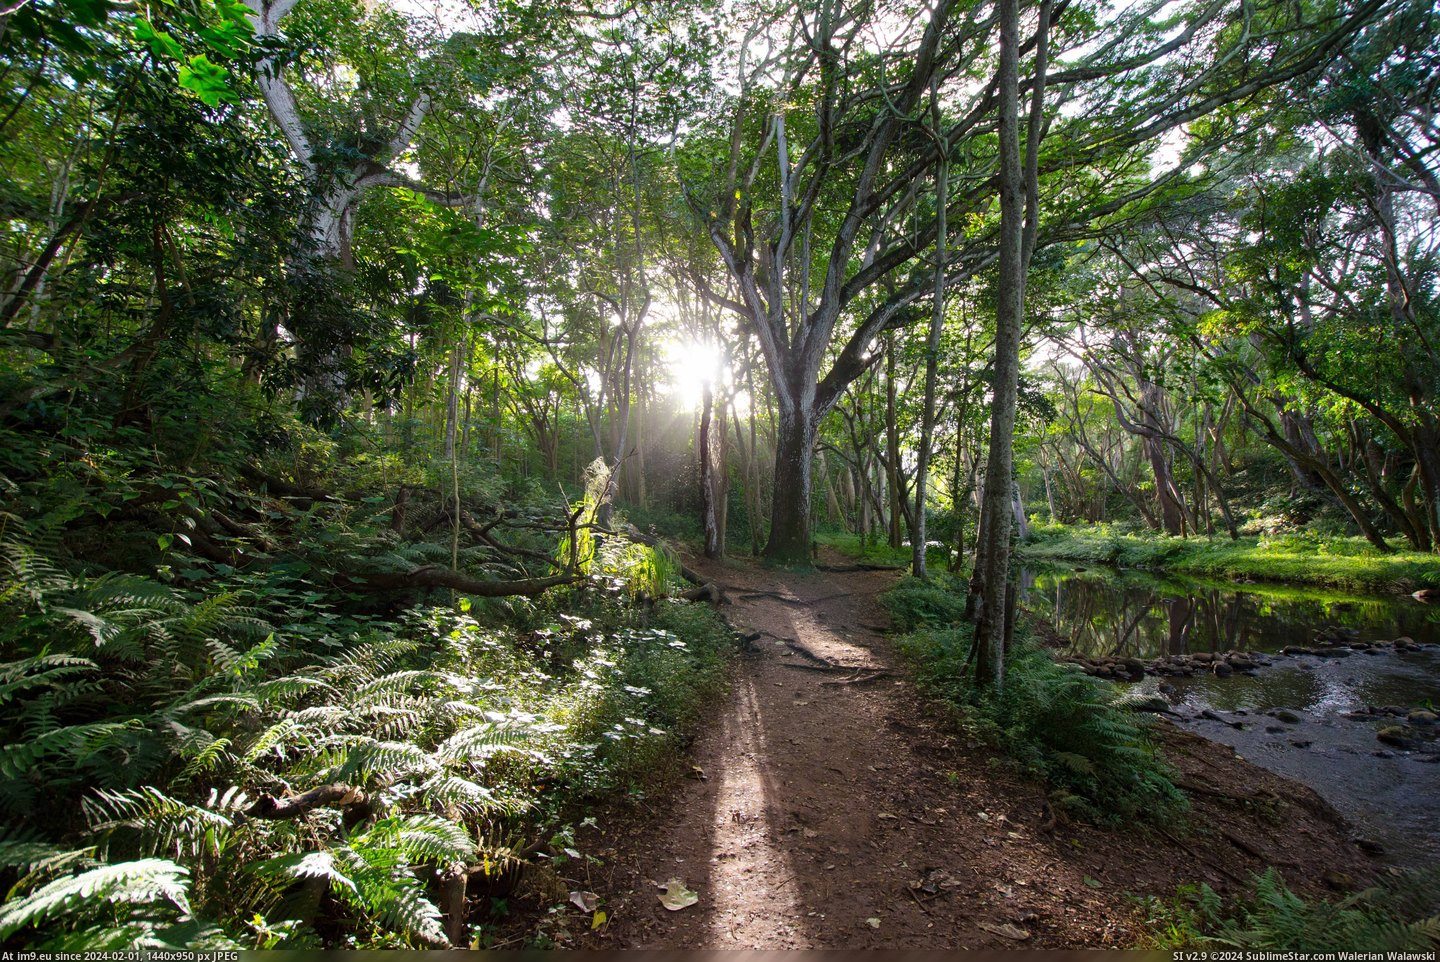 #Forest #Walk #4928x3264 #Hawaii #Rain [Earthporn] A walk through a rain forest, Kapaʻa, Hawaii [4928x3264] Pic. (Изображение из альбом My r/EARTHPORN favs))